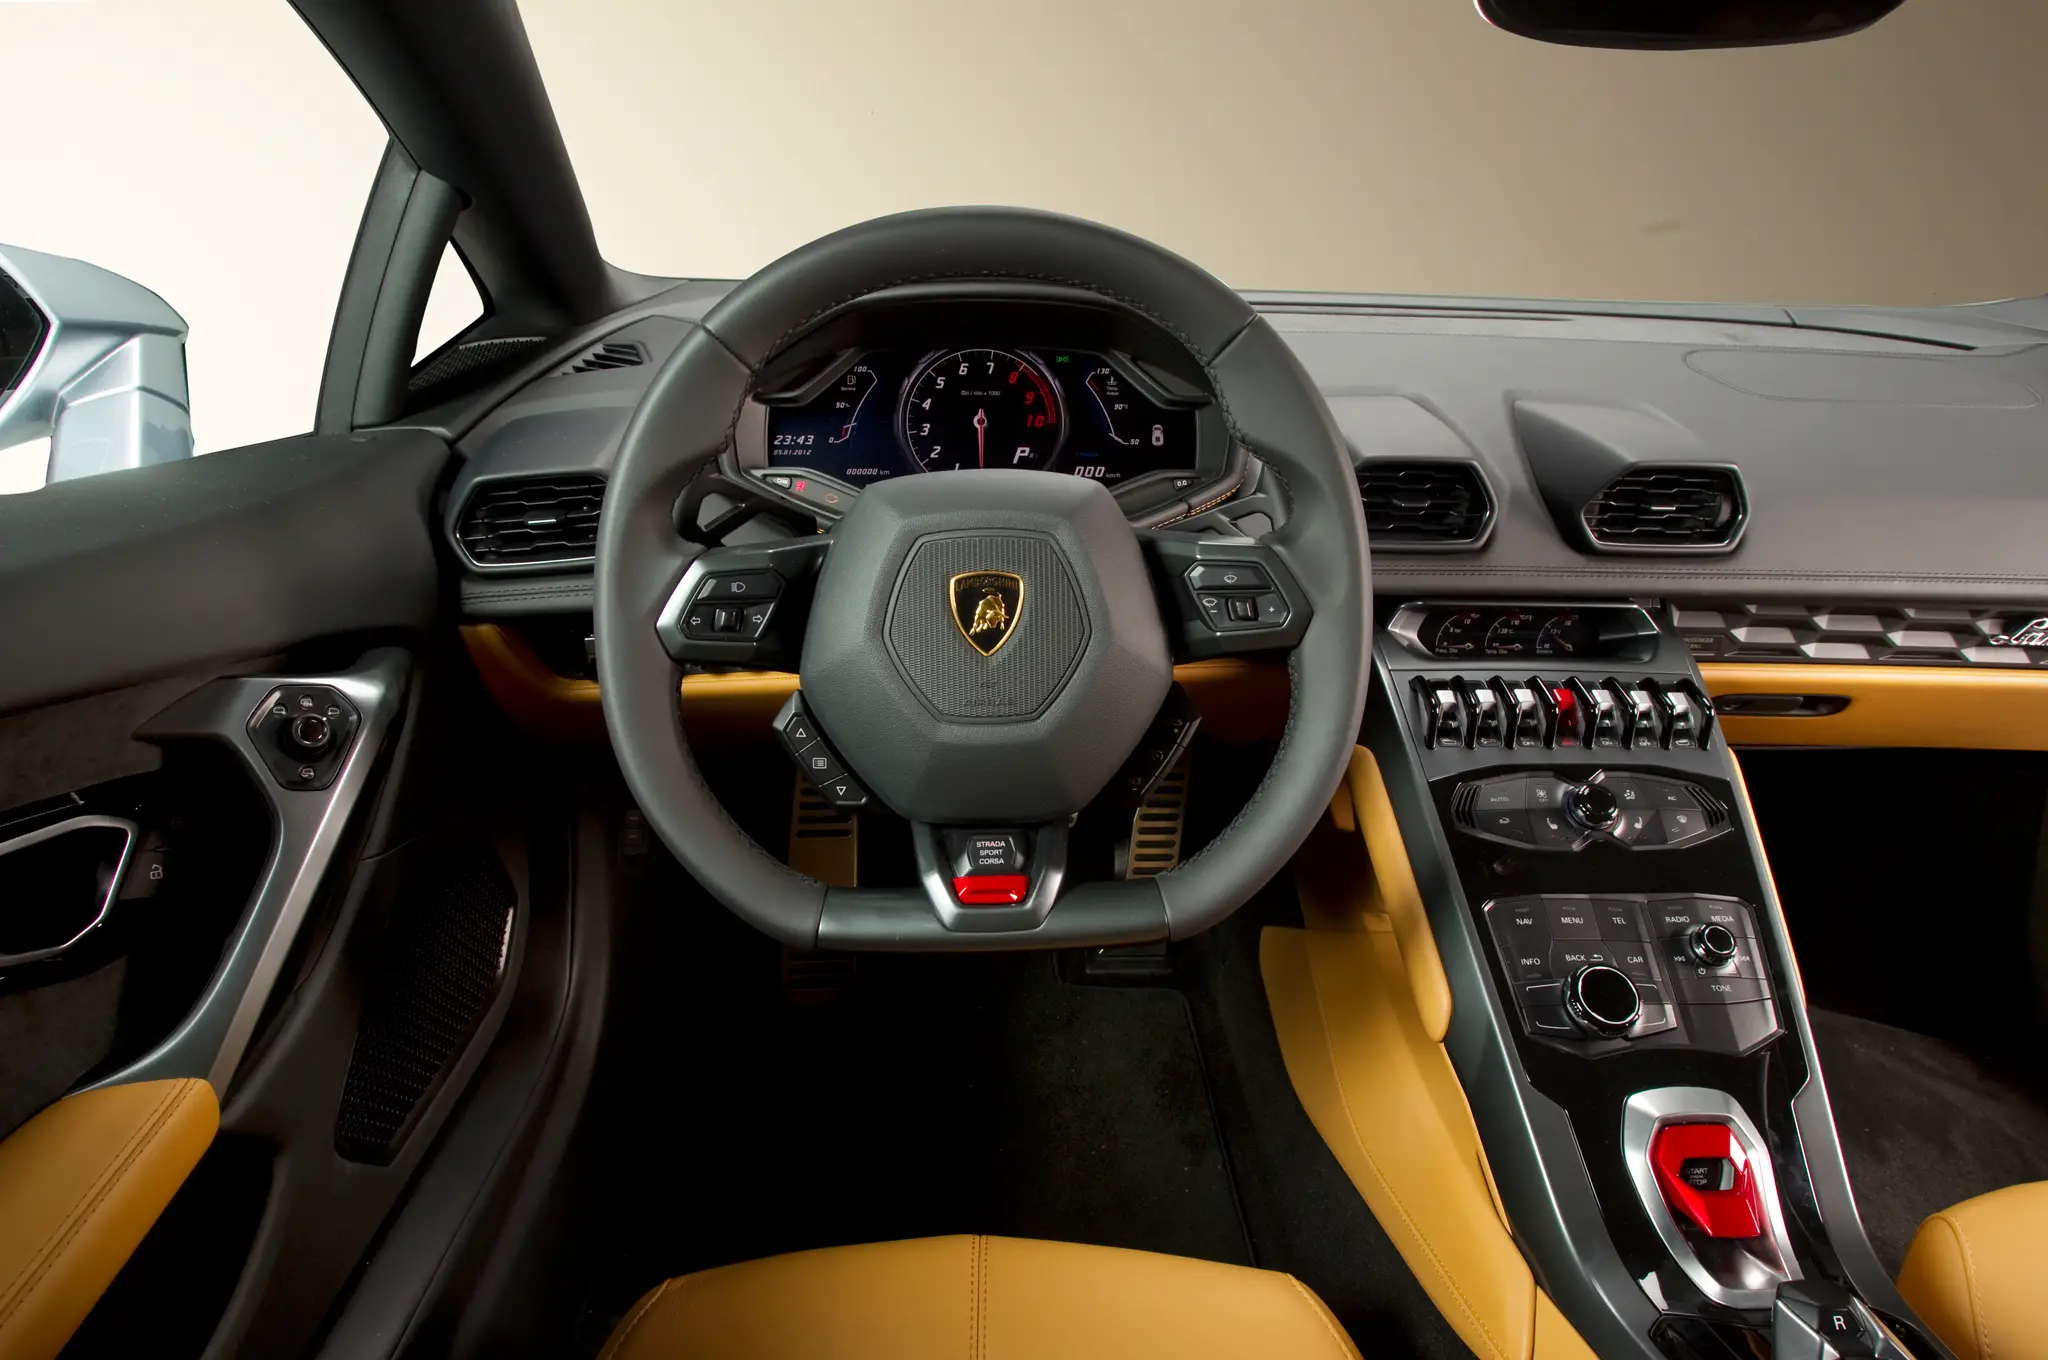 Lamborghini Huracan Lp 580 2 Interior Image Gallery